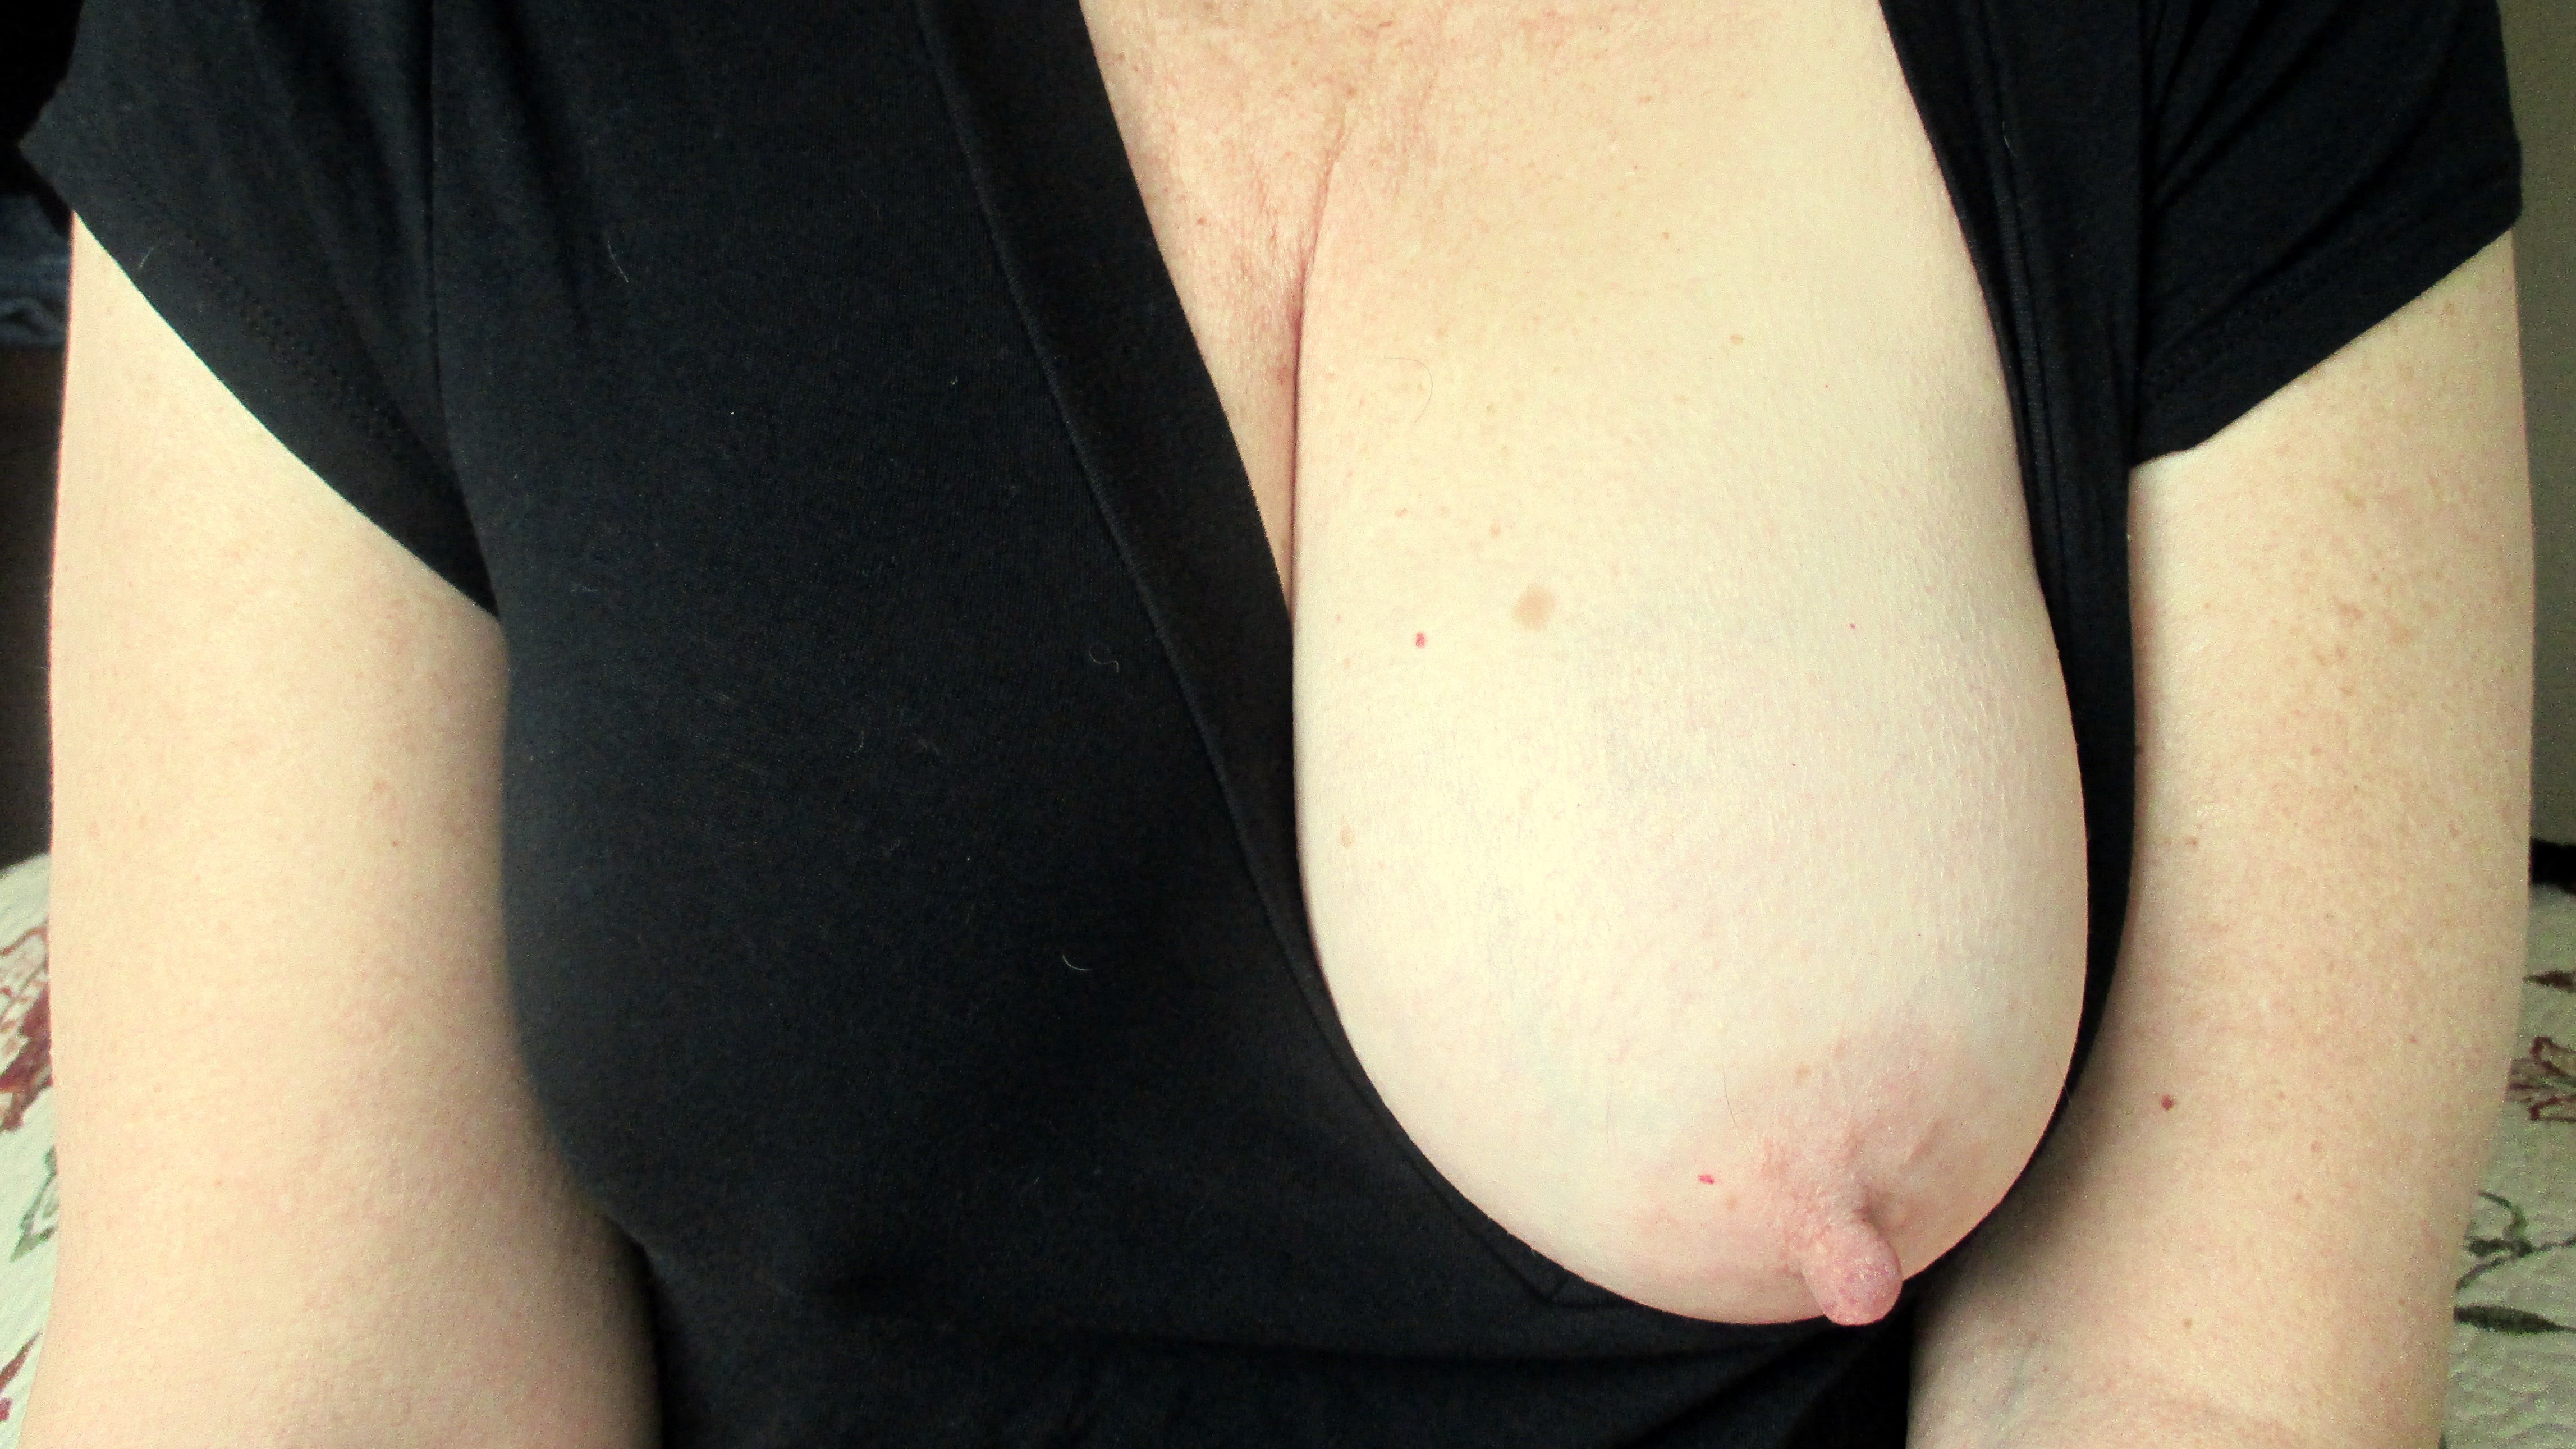 One boob photos since 2012.